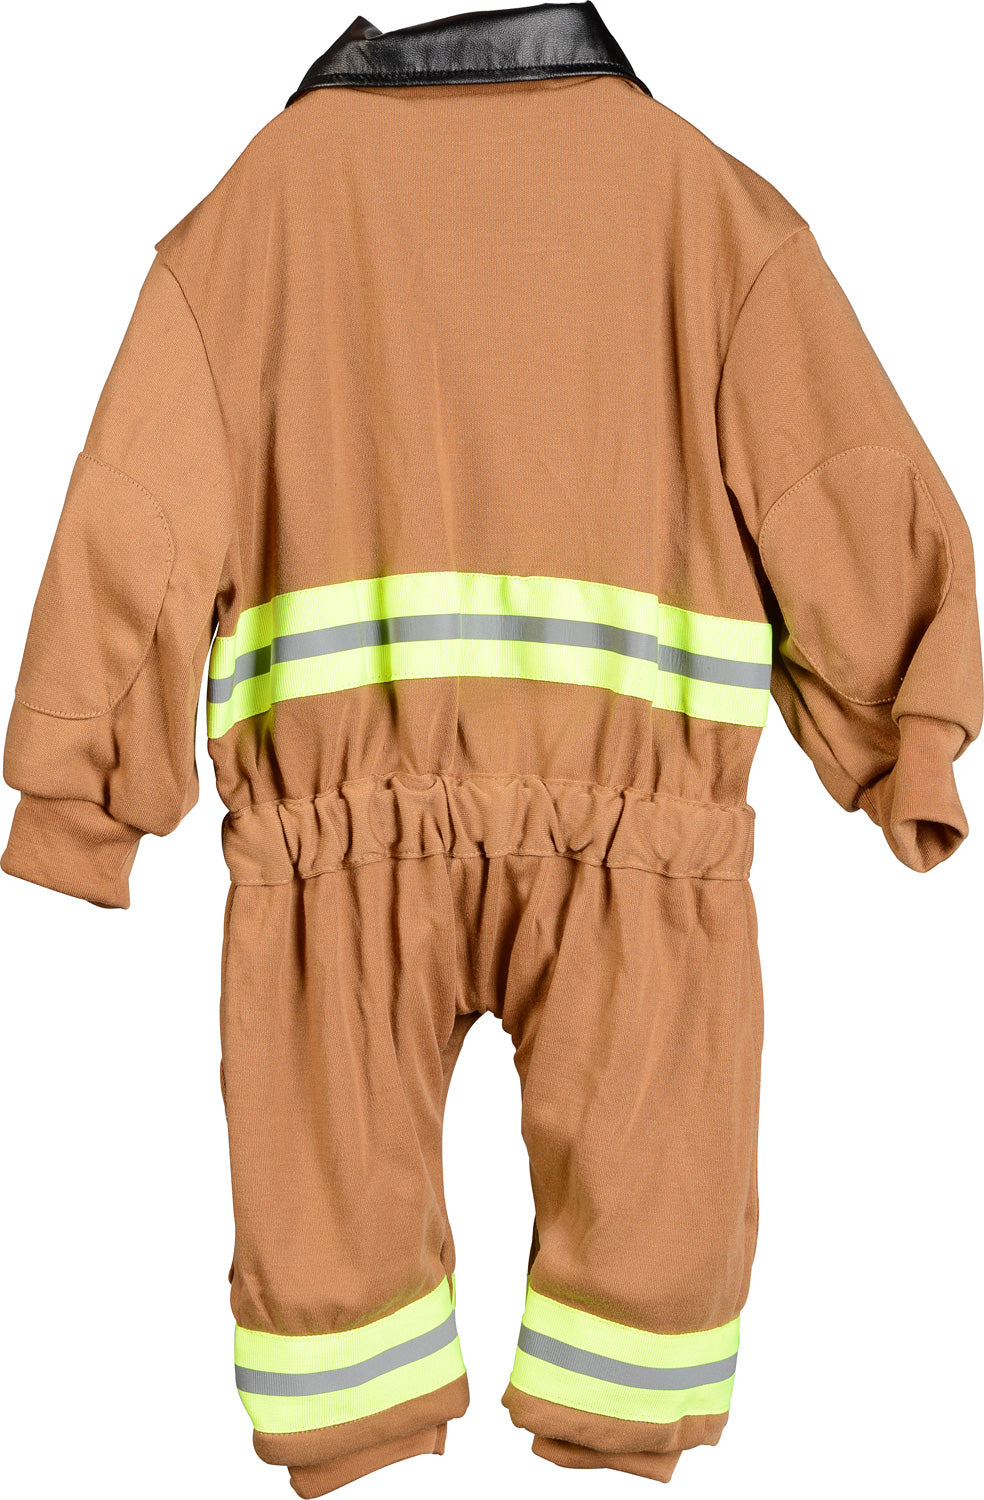 Aeromax Jr. Fire Fighter Suit, Child Sizes (Tan)